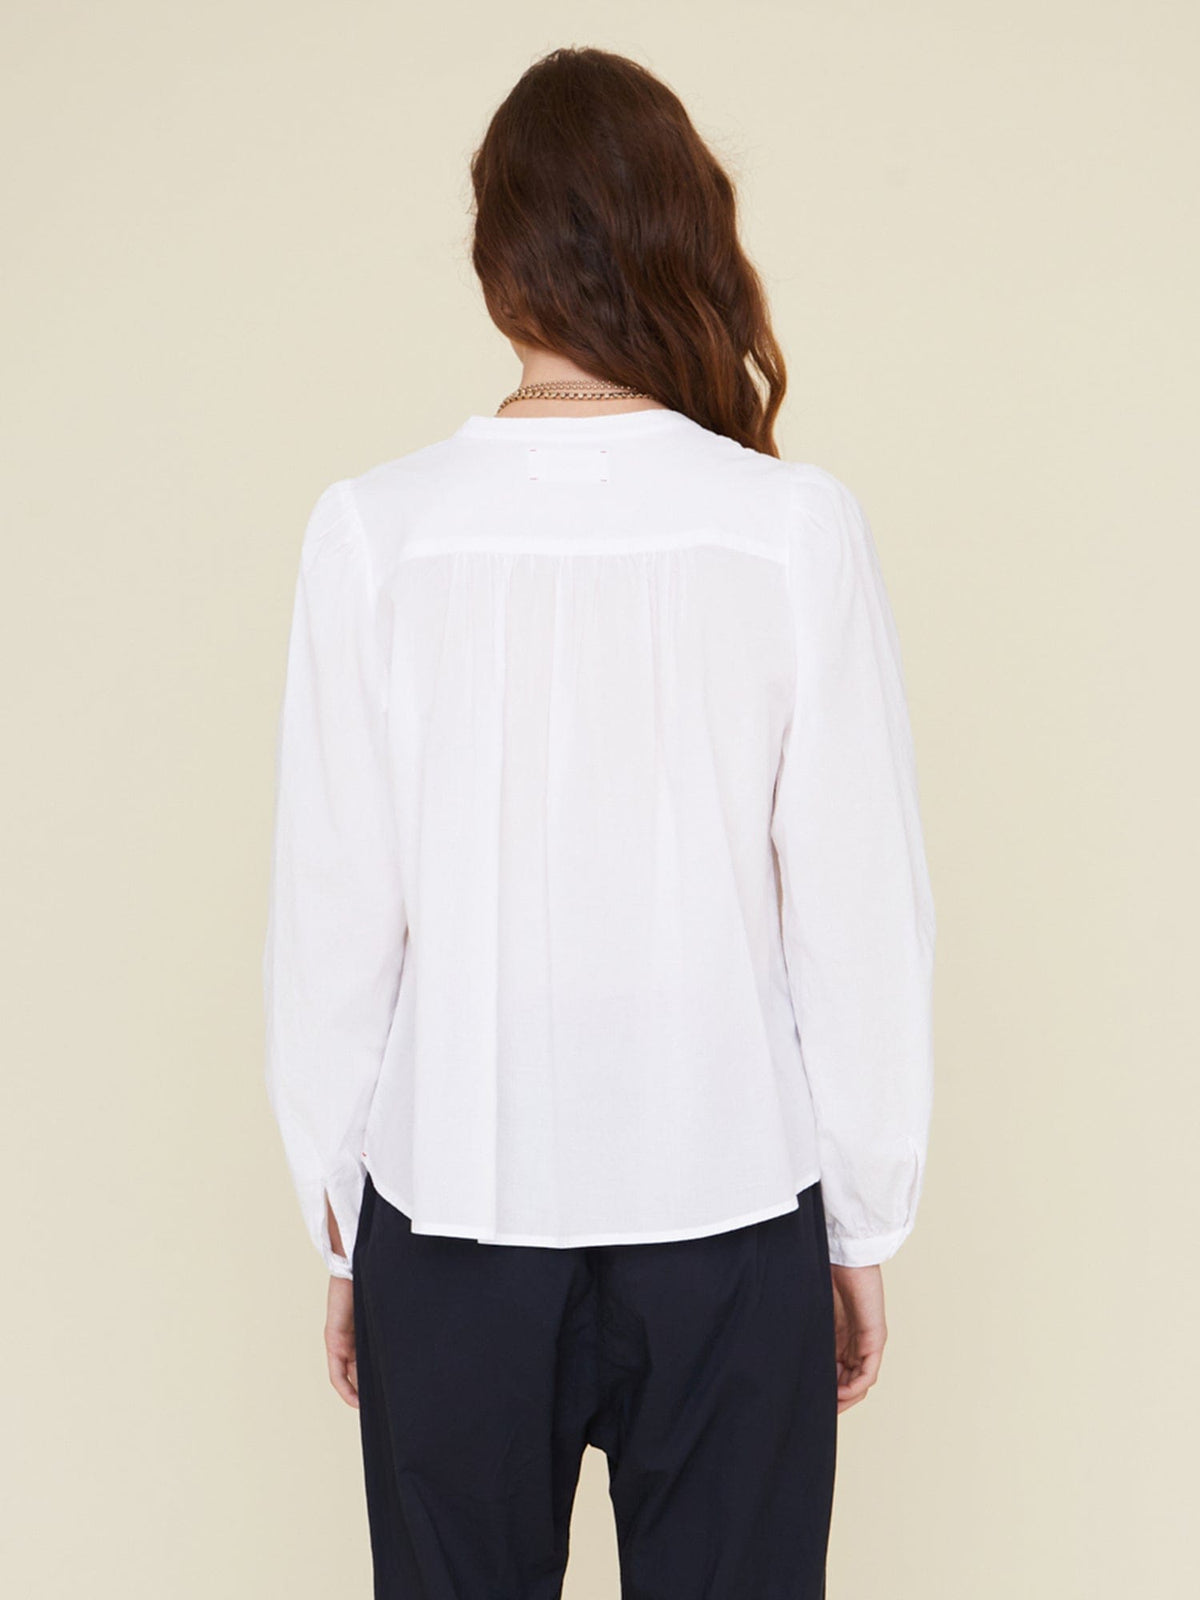 Trace Shirt - White